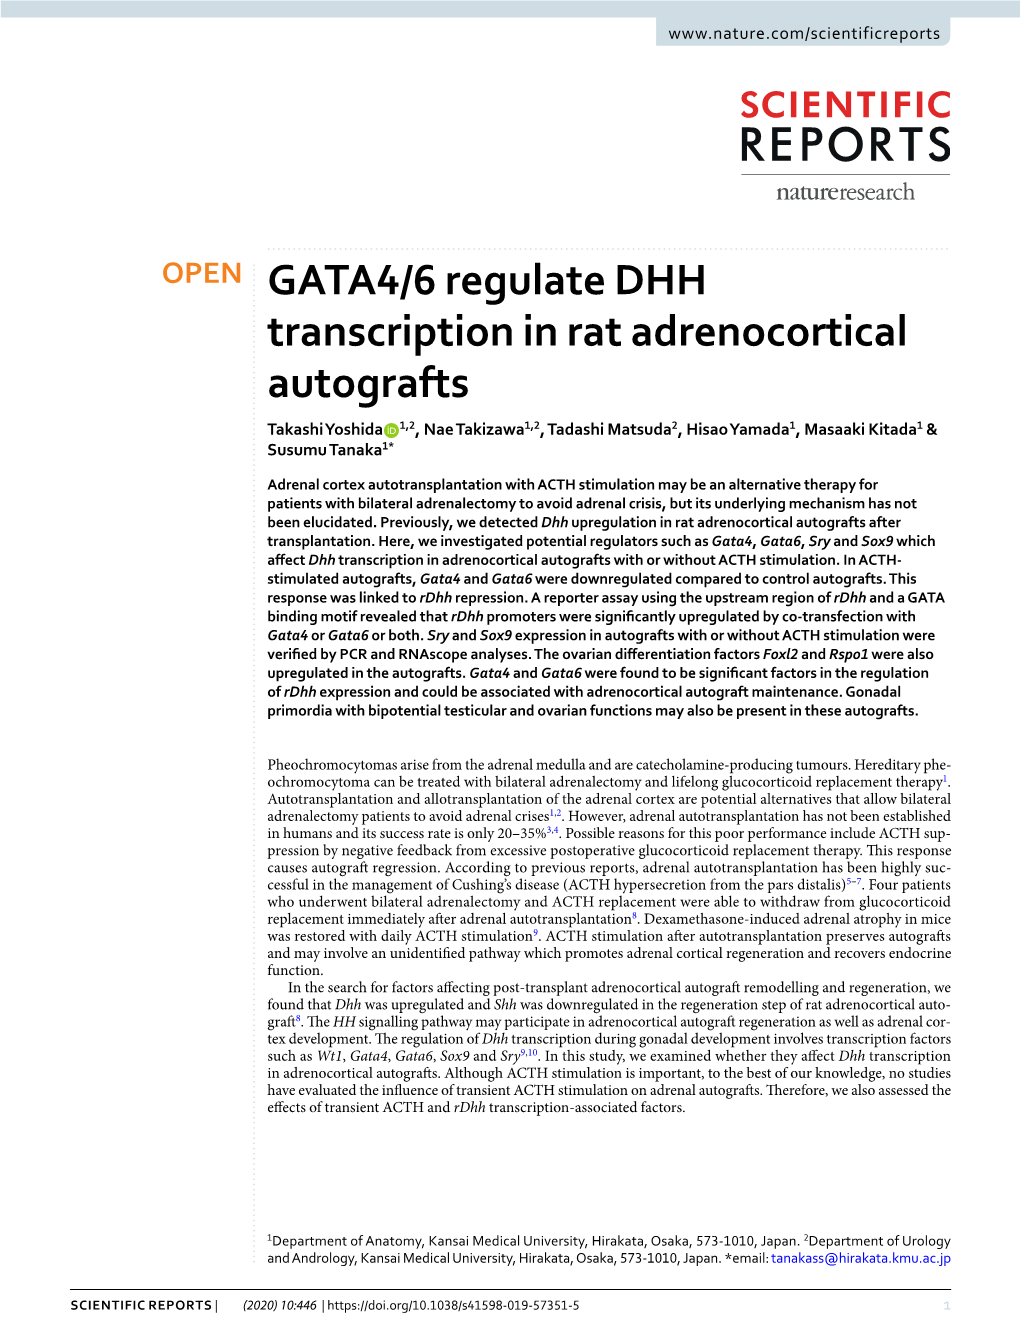 GATA4/6 Regulate DHH Transcription in Rat Adrenocortical Autografts